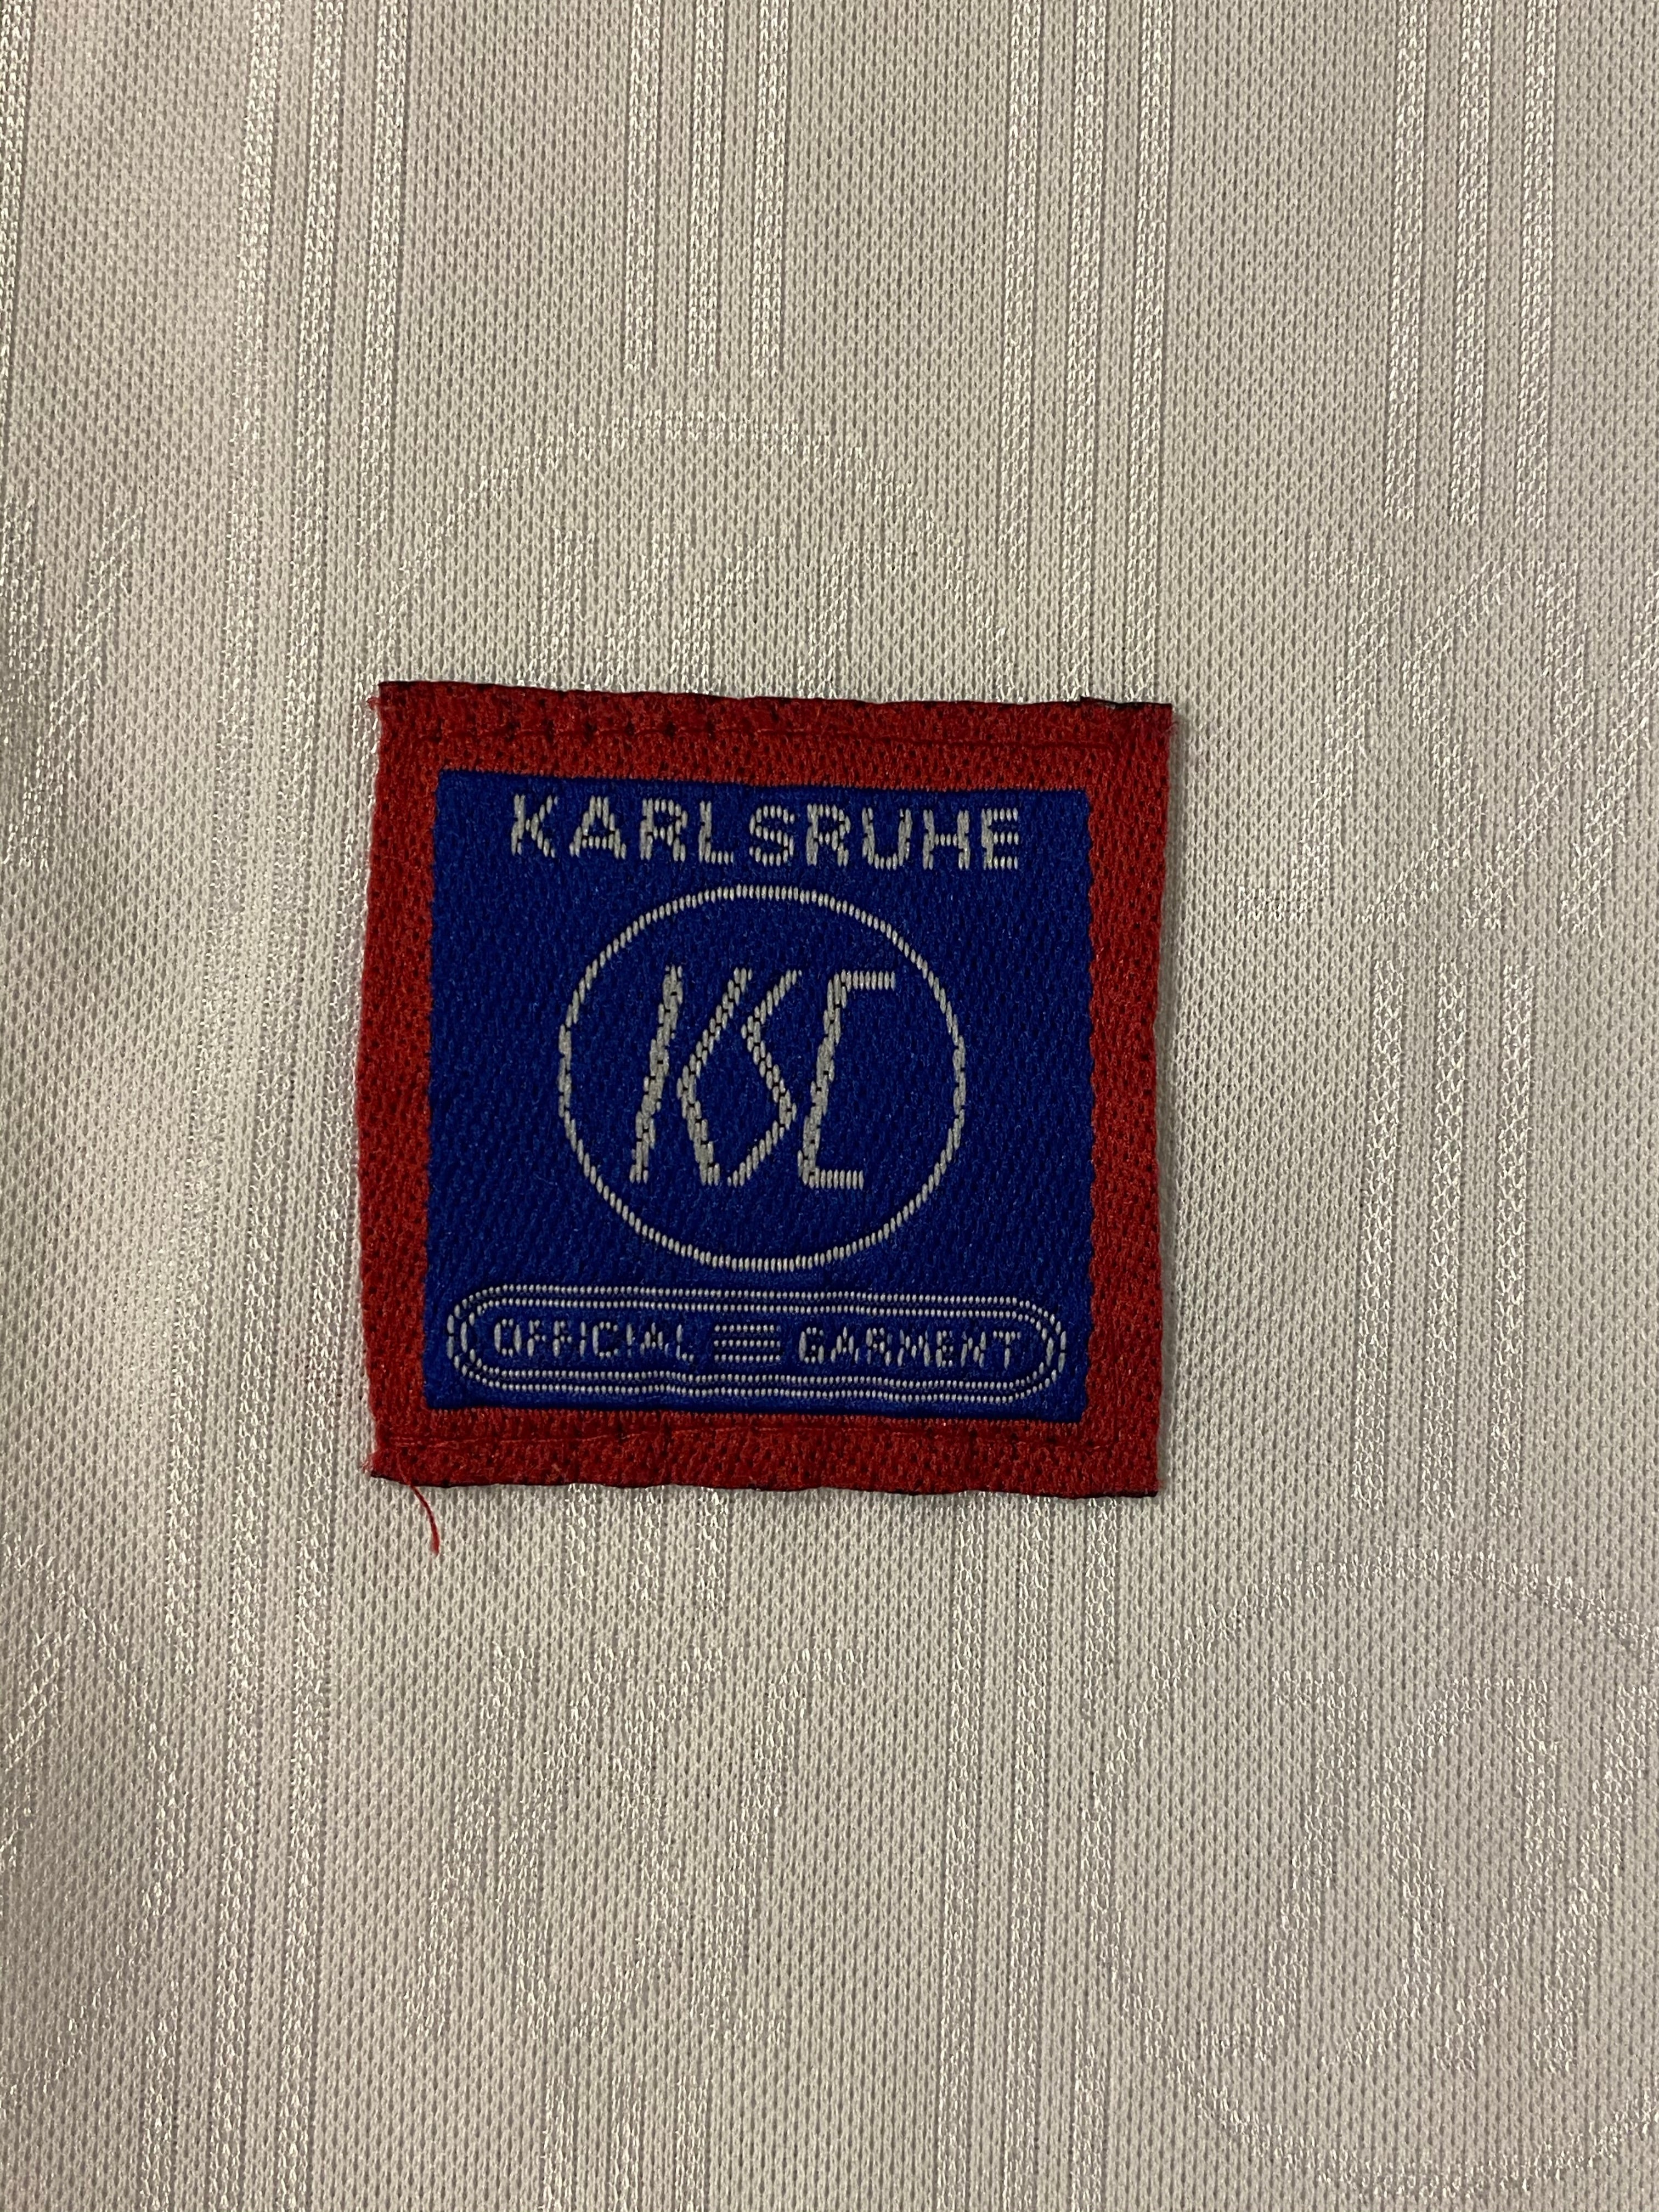 1996/98 Karlsruher Home Shirt #10 (S) 8.5/10